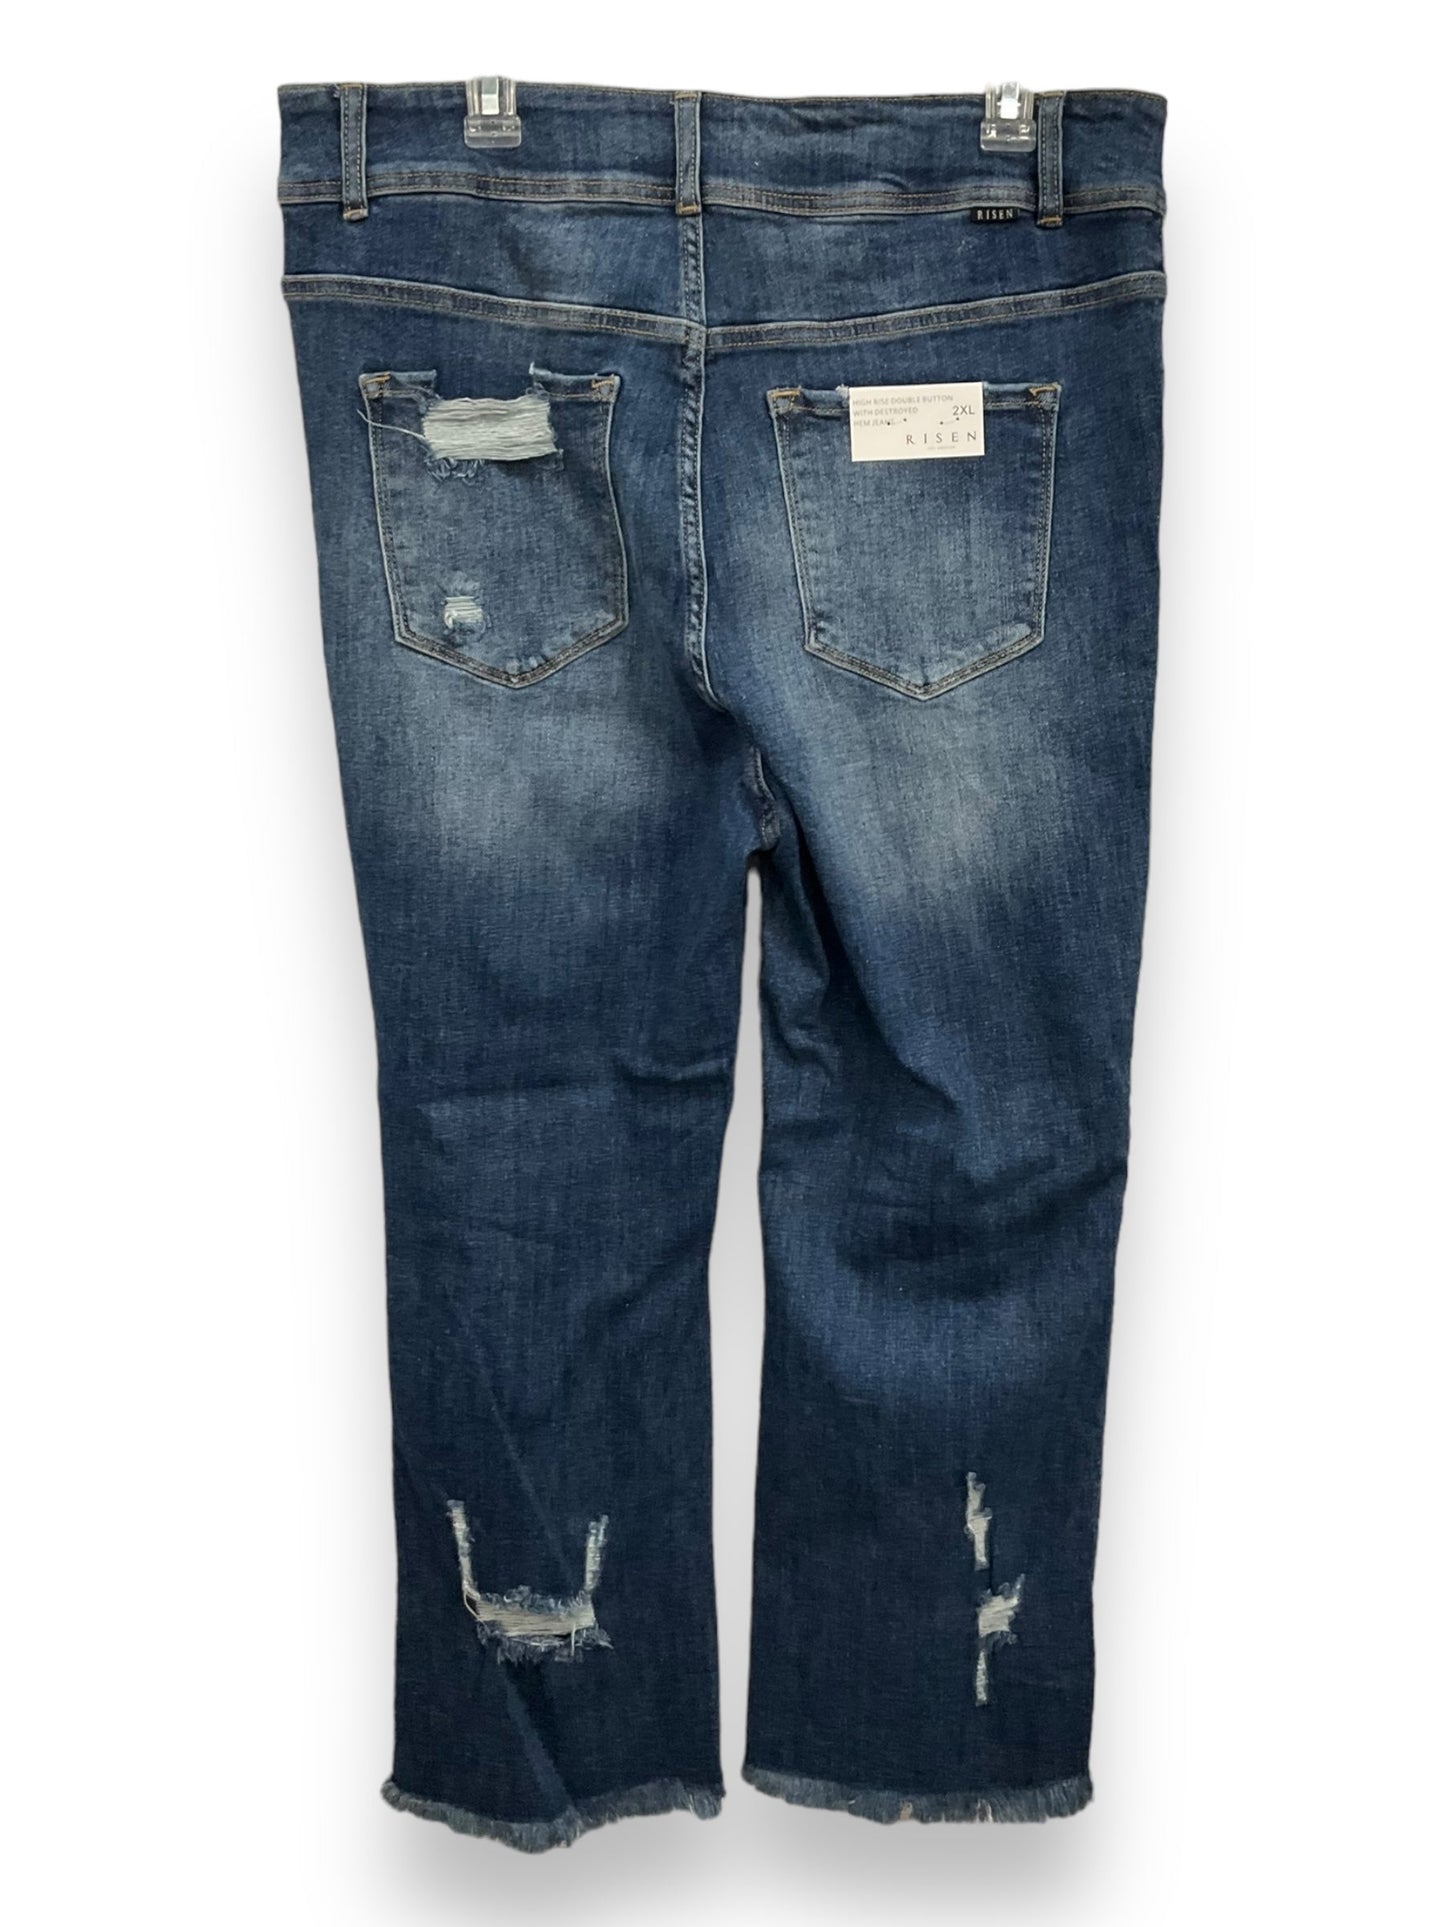 Blue Denim Jeans Skinny Risen, Size 2x